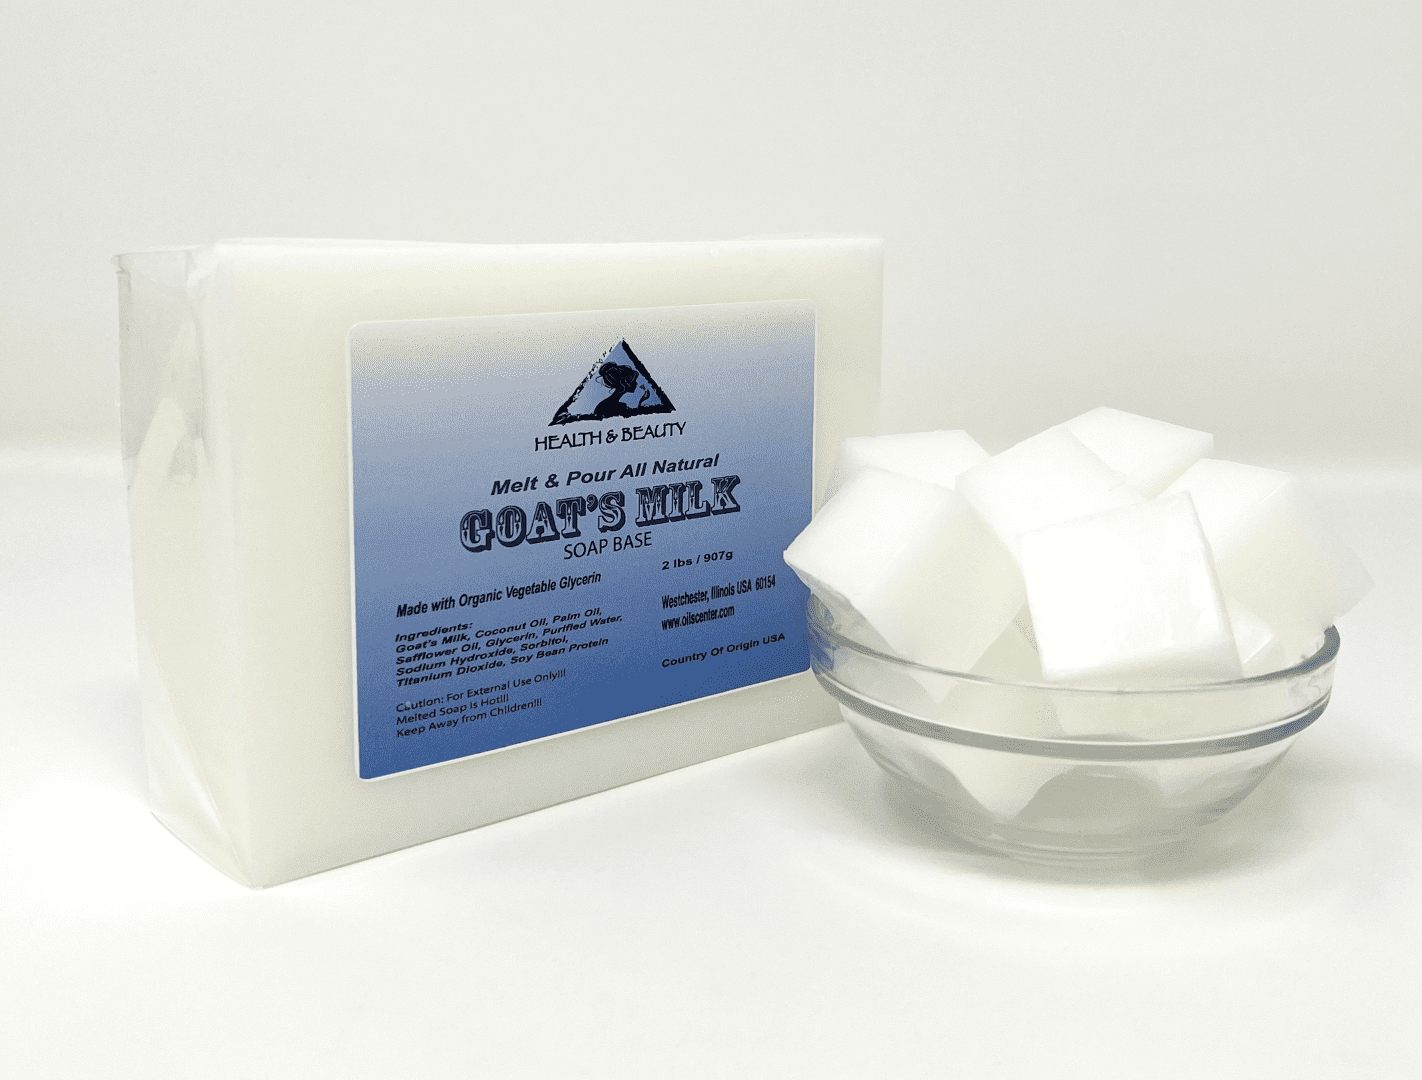 Goats Milk Glycerin Melt & Pour Soap Base Organic Pure 2 lb